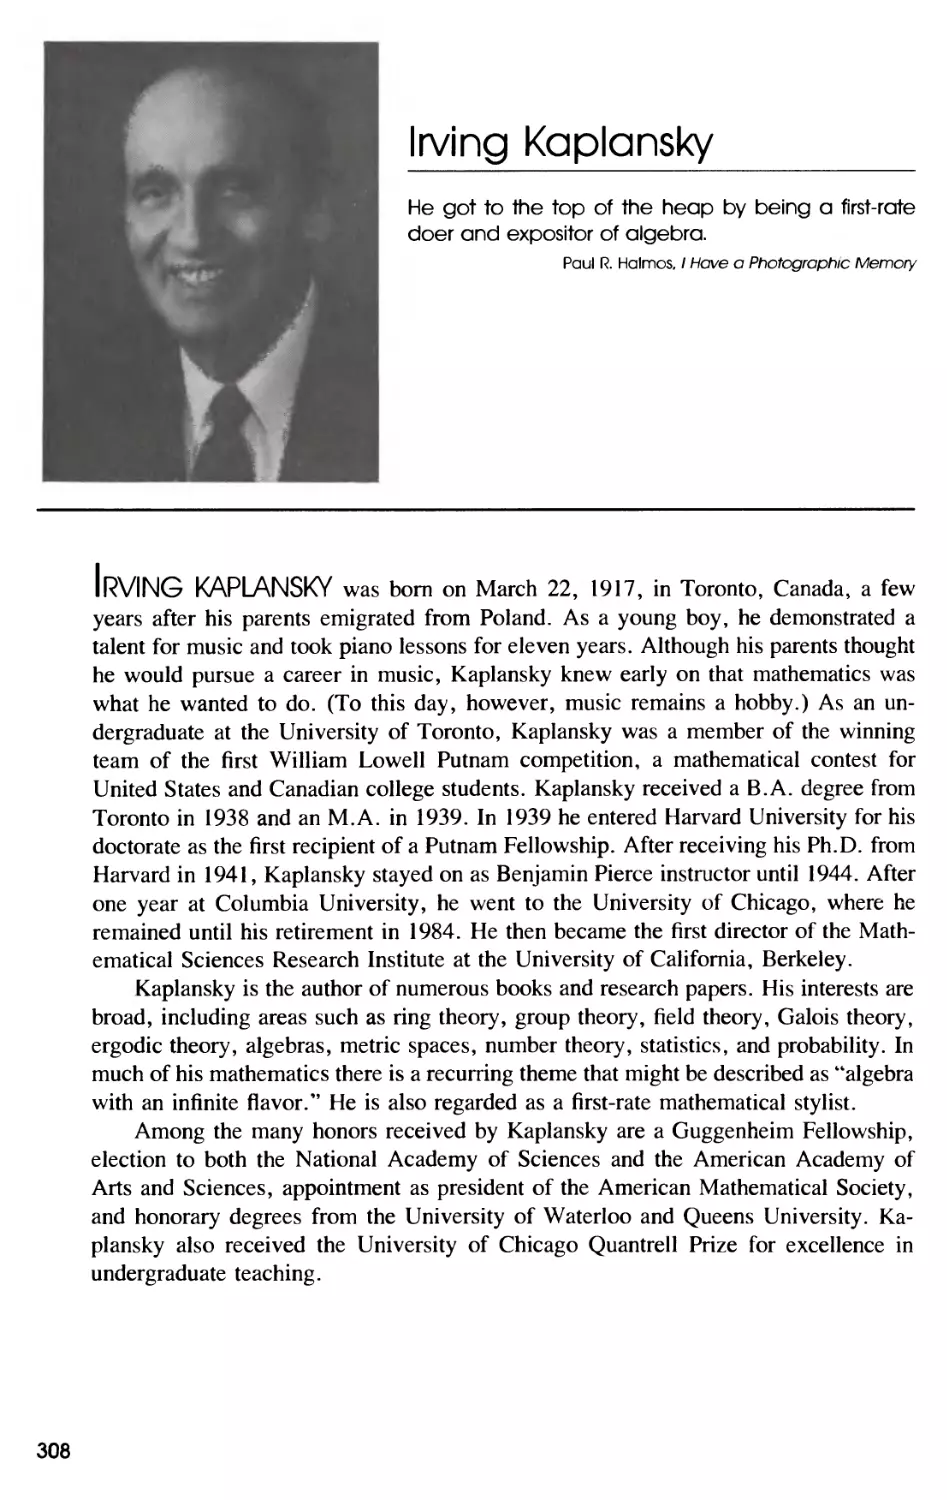 Biography of Irving Kaplansky